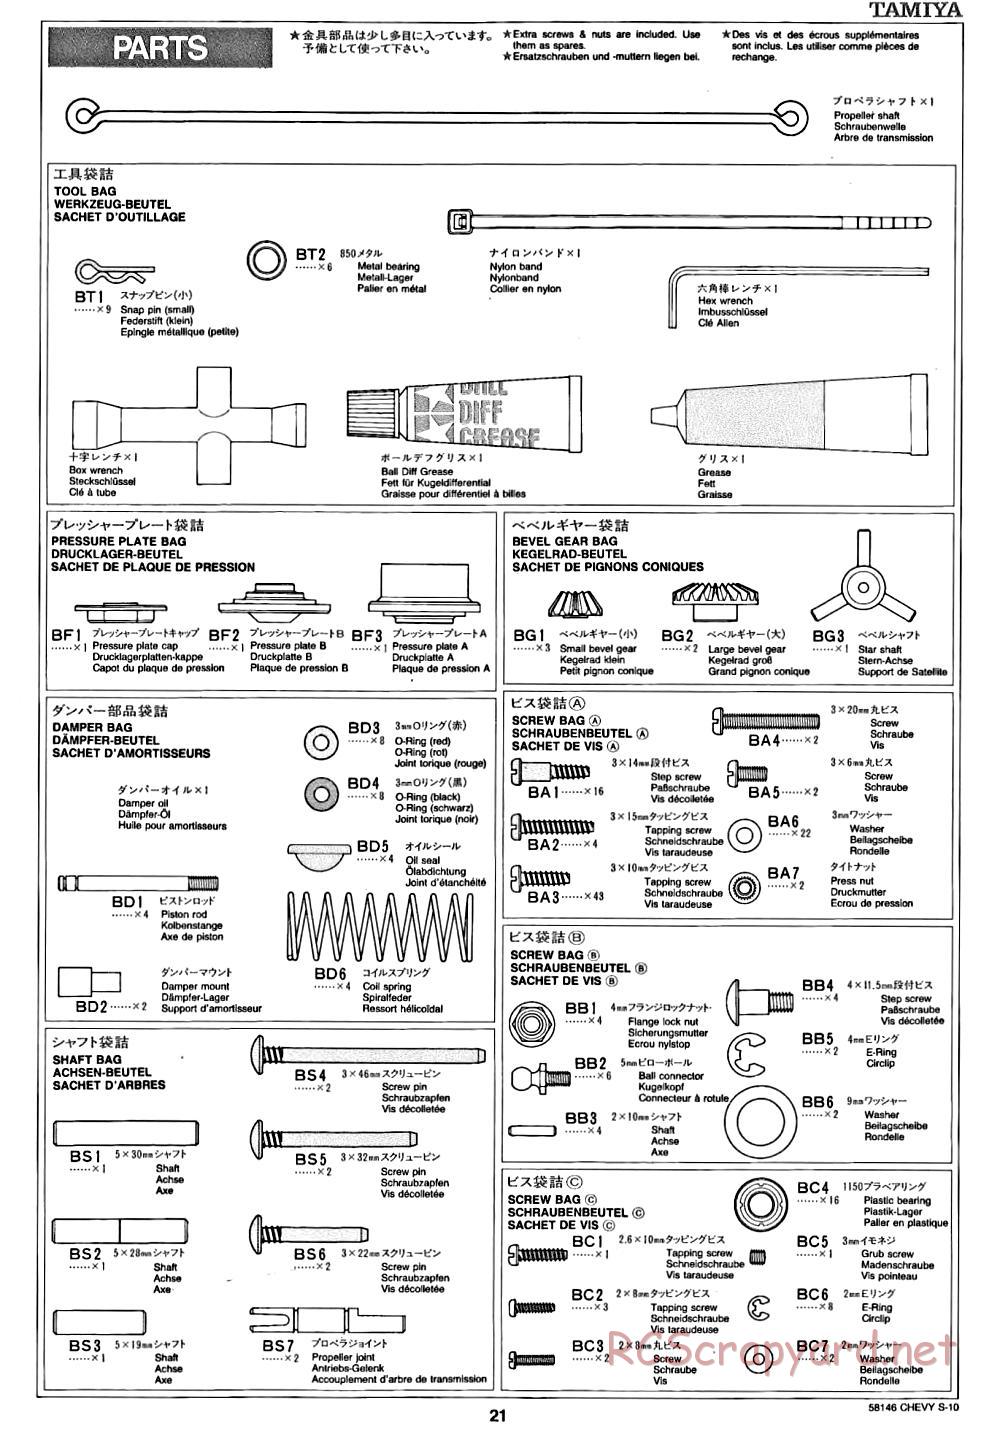 Tamiya - Chevy S-10 Chassis - Manual - Page 21